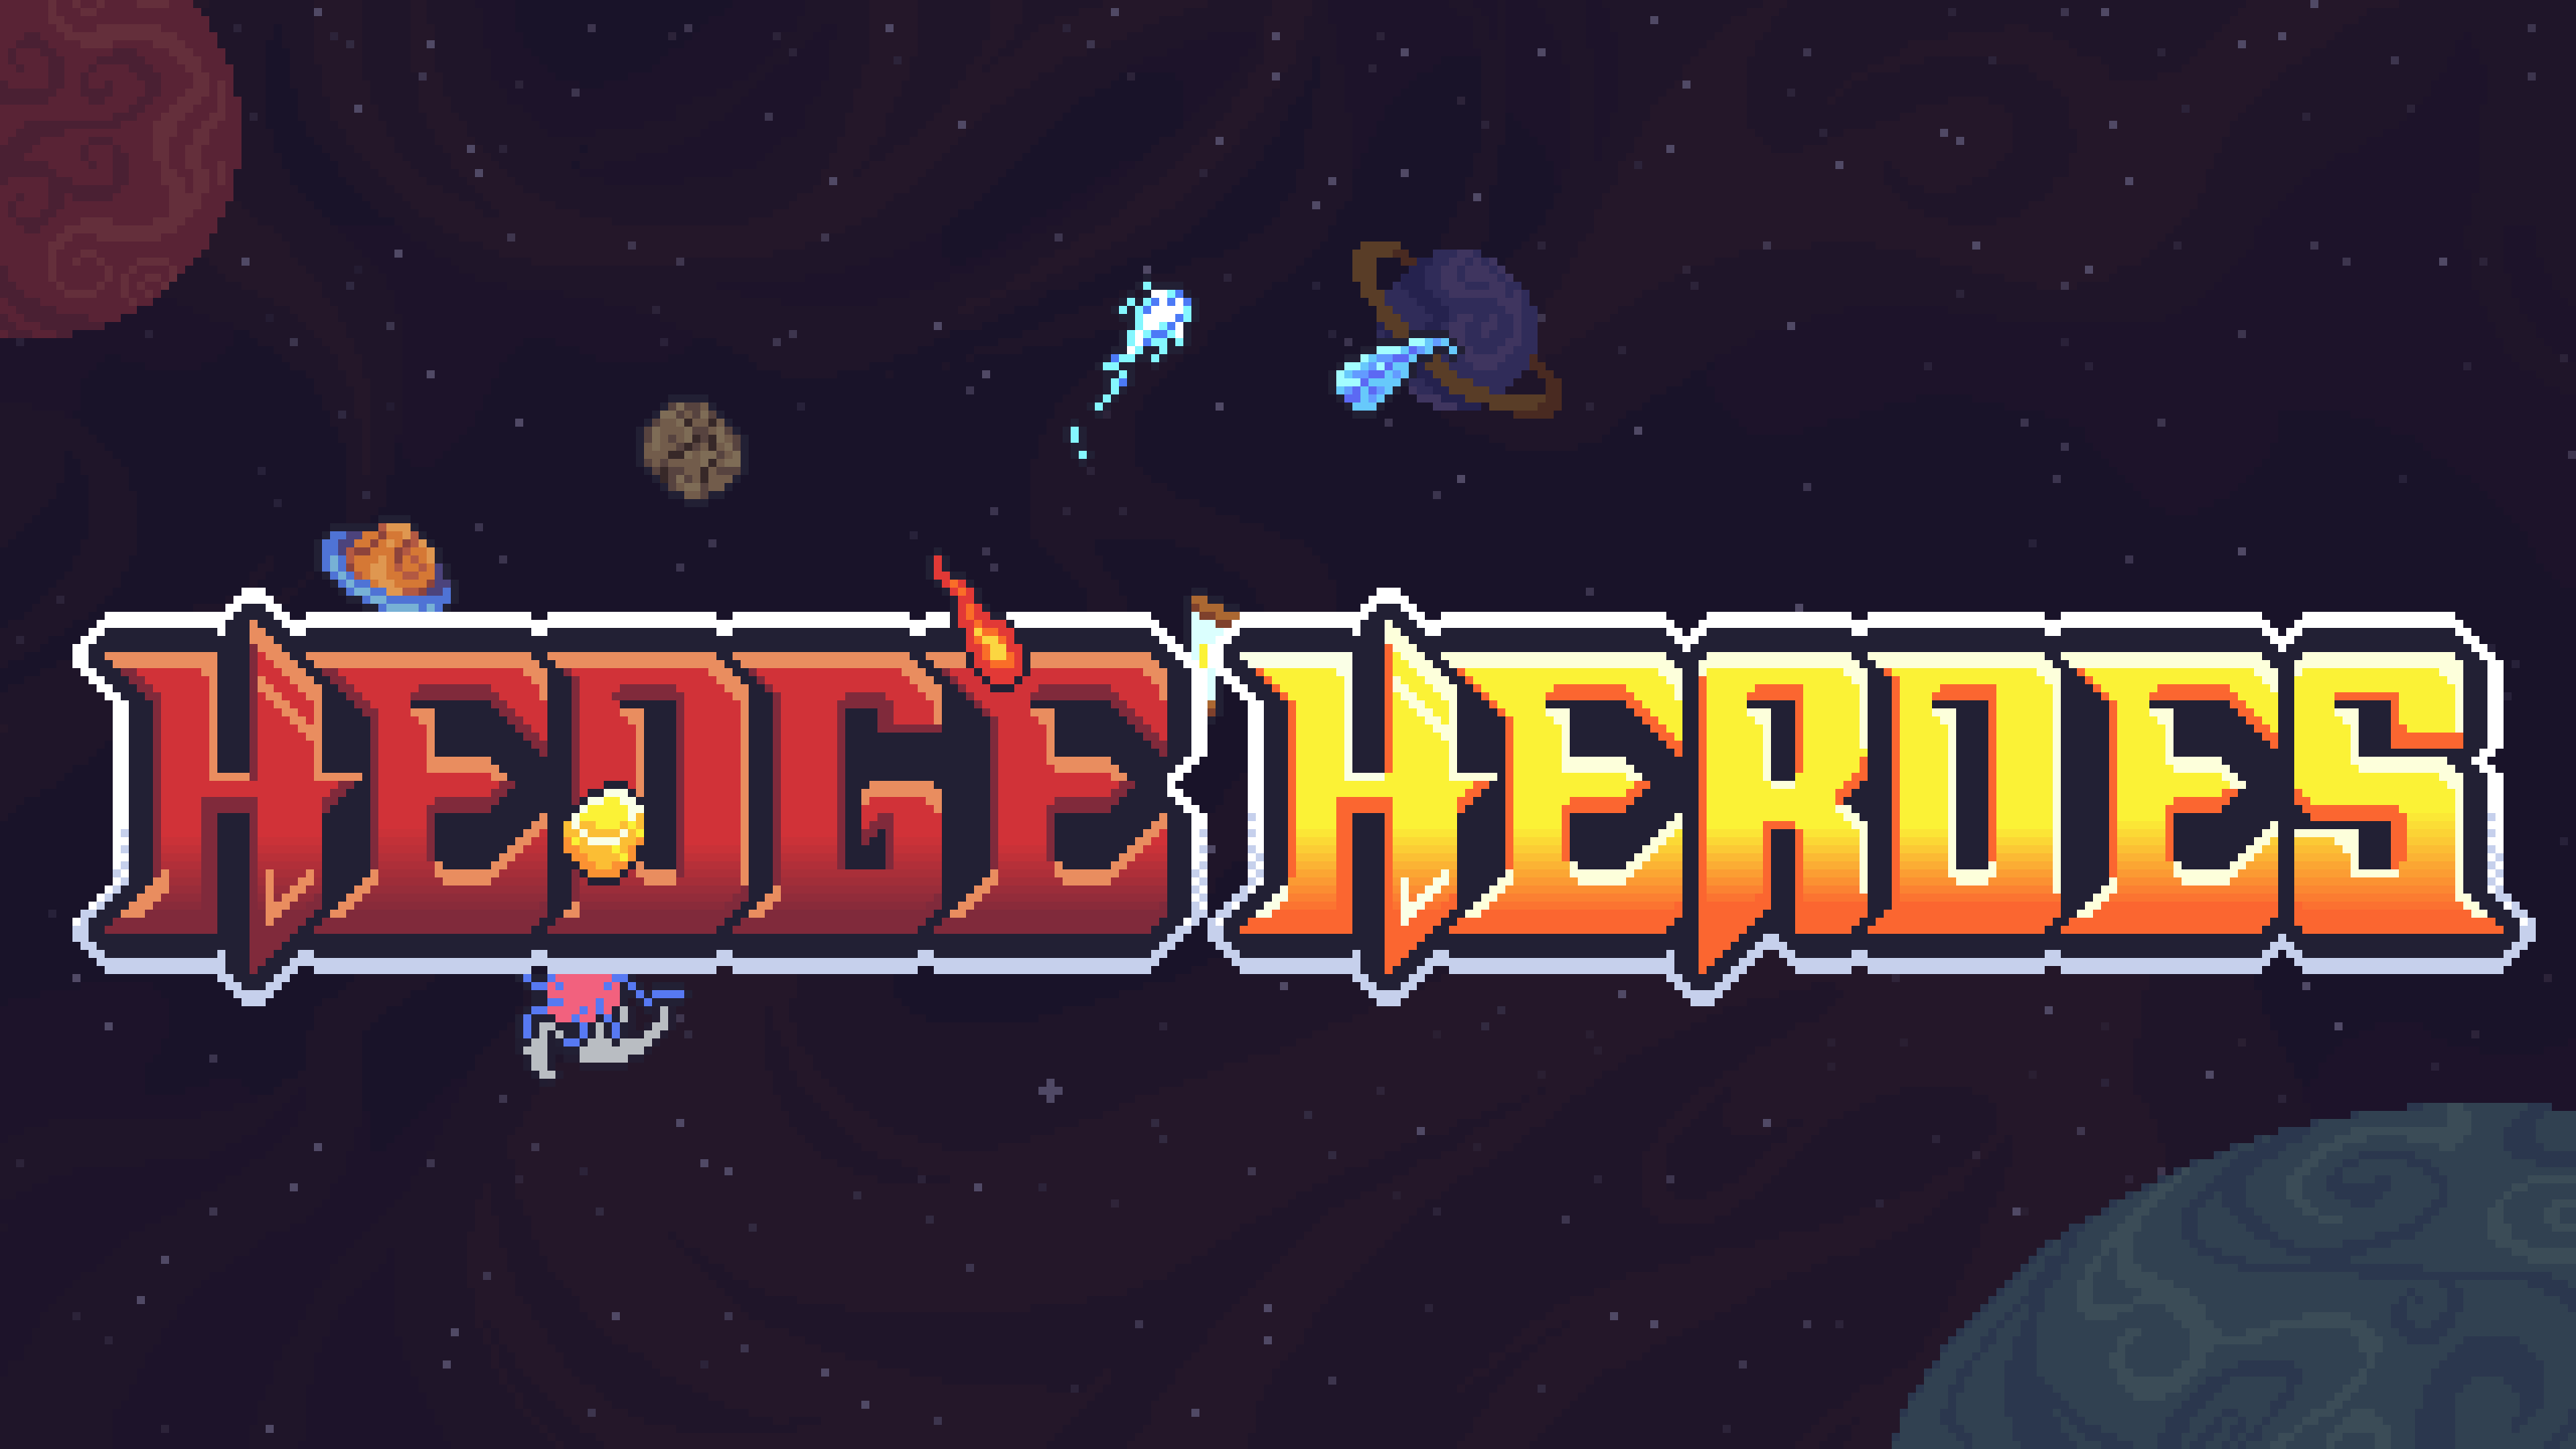 Hedge_Heroes 横幅